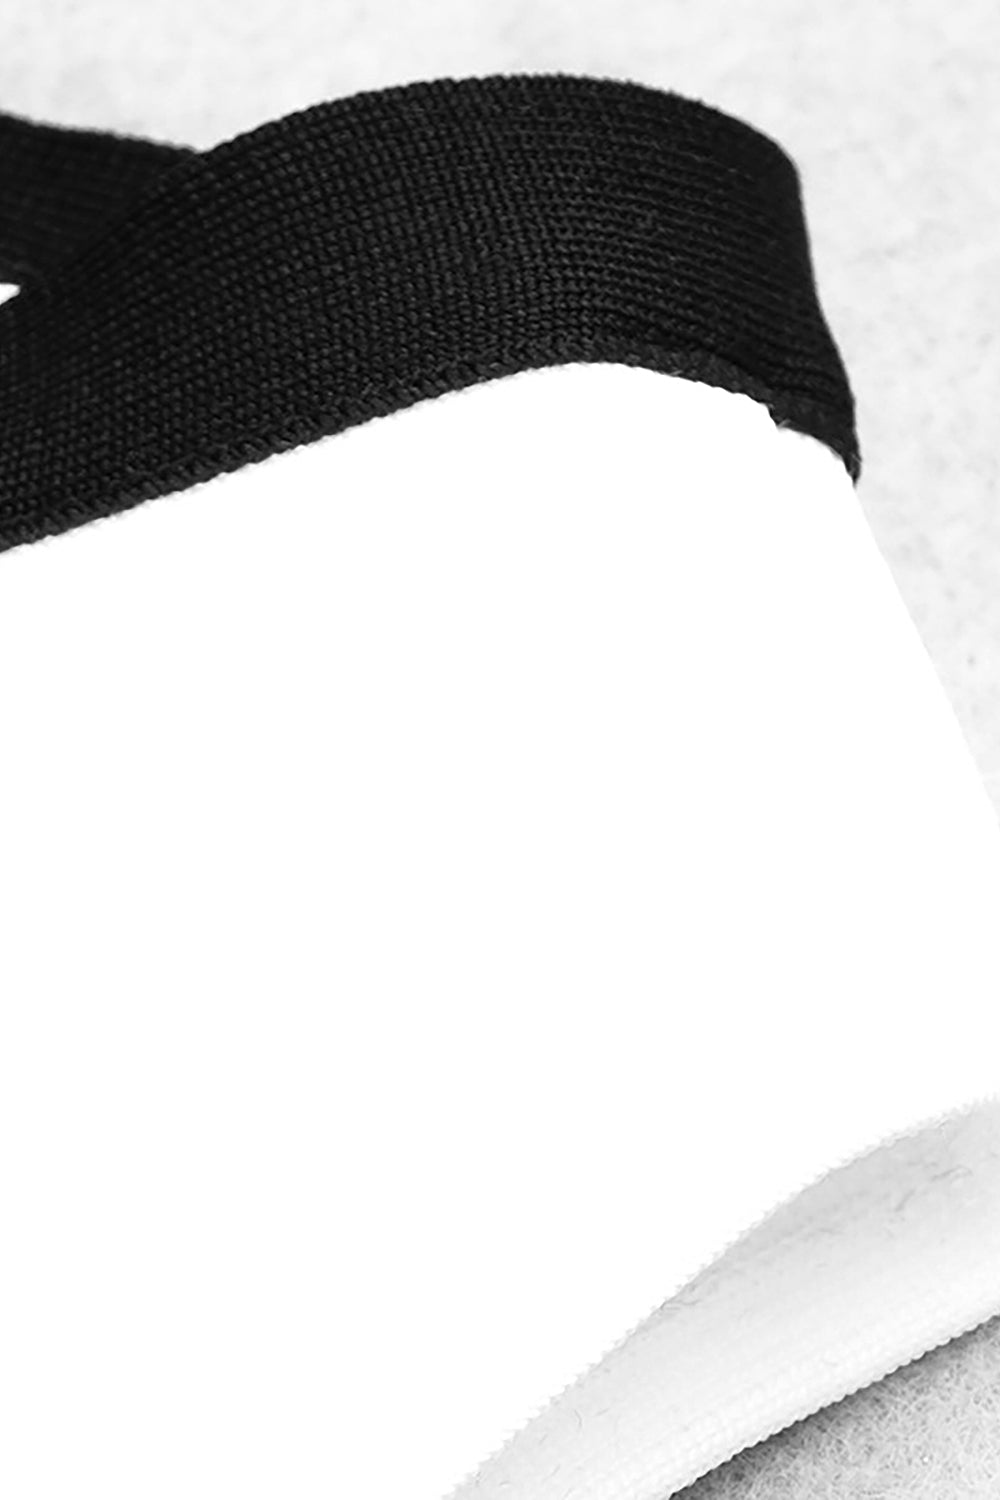 Vestido Bandagem Bodycon Colorblock Preto Branco Sem Mangas